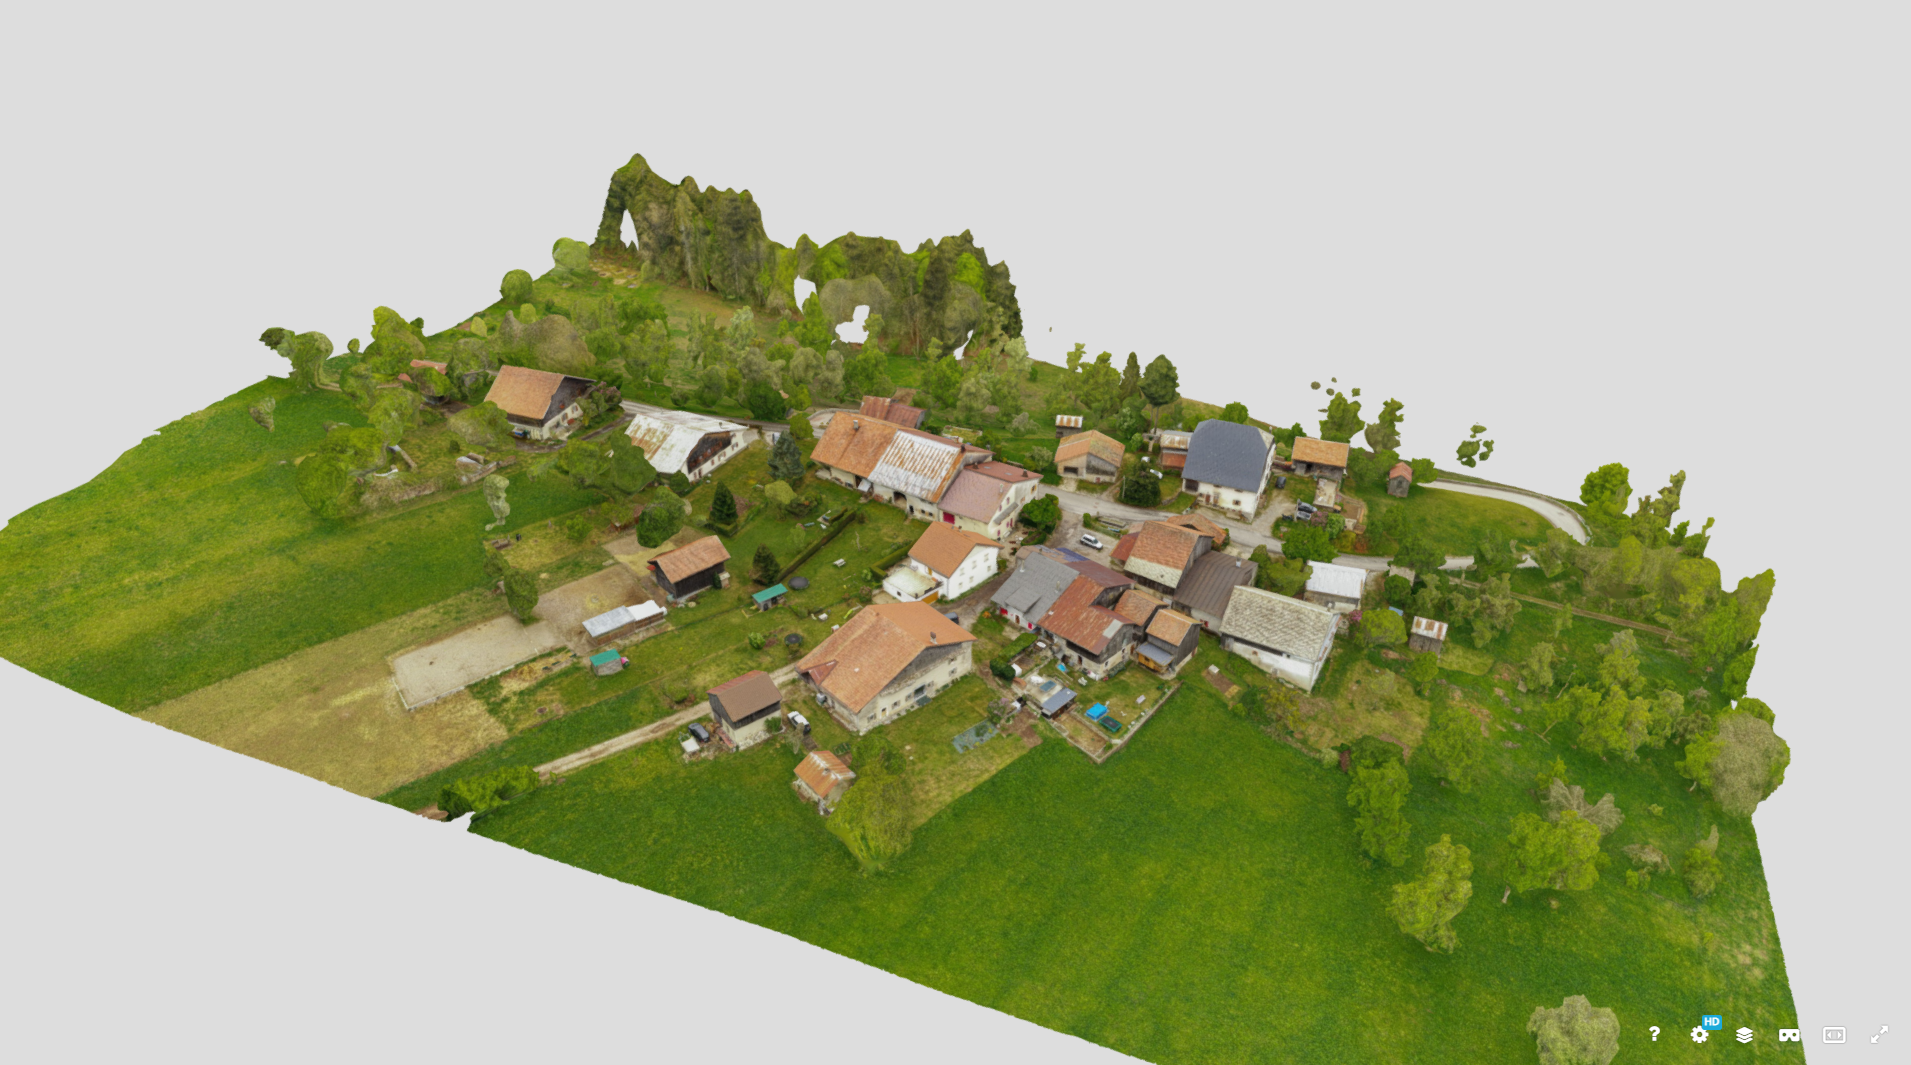 Preuveo blog - Exemple de modelisation 3D en drone